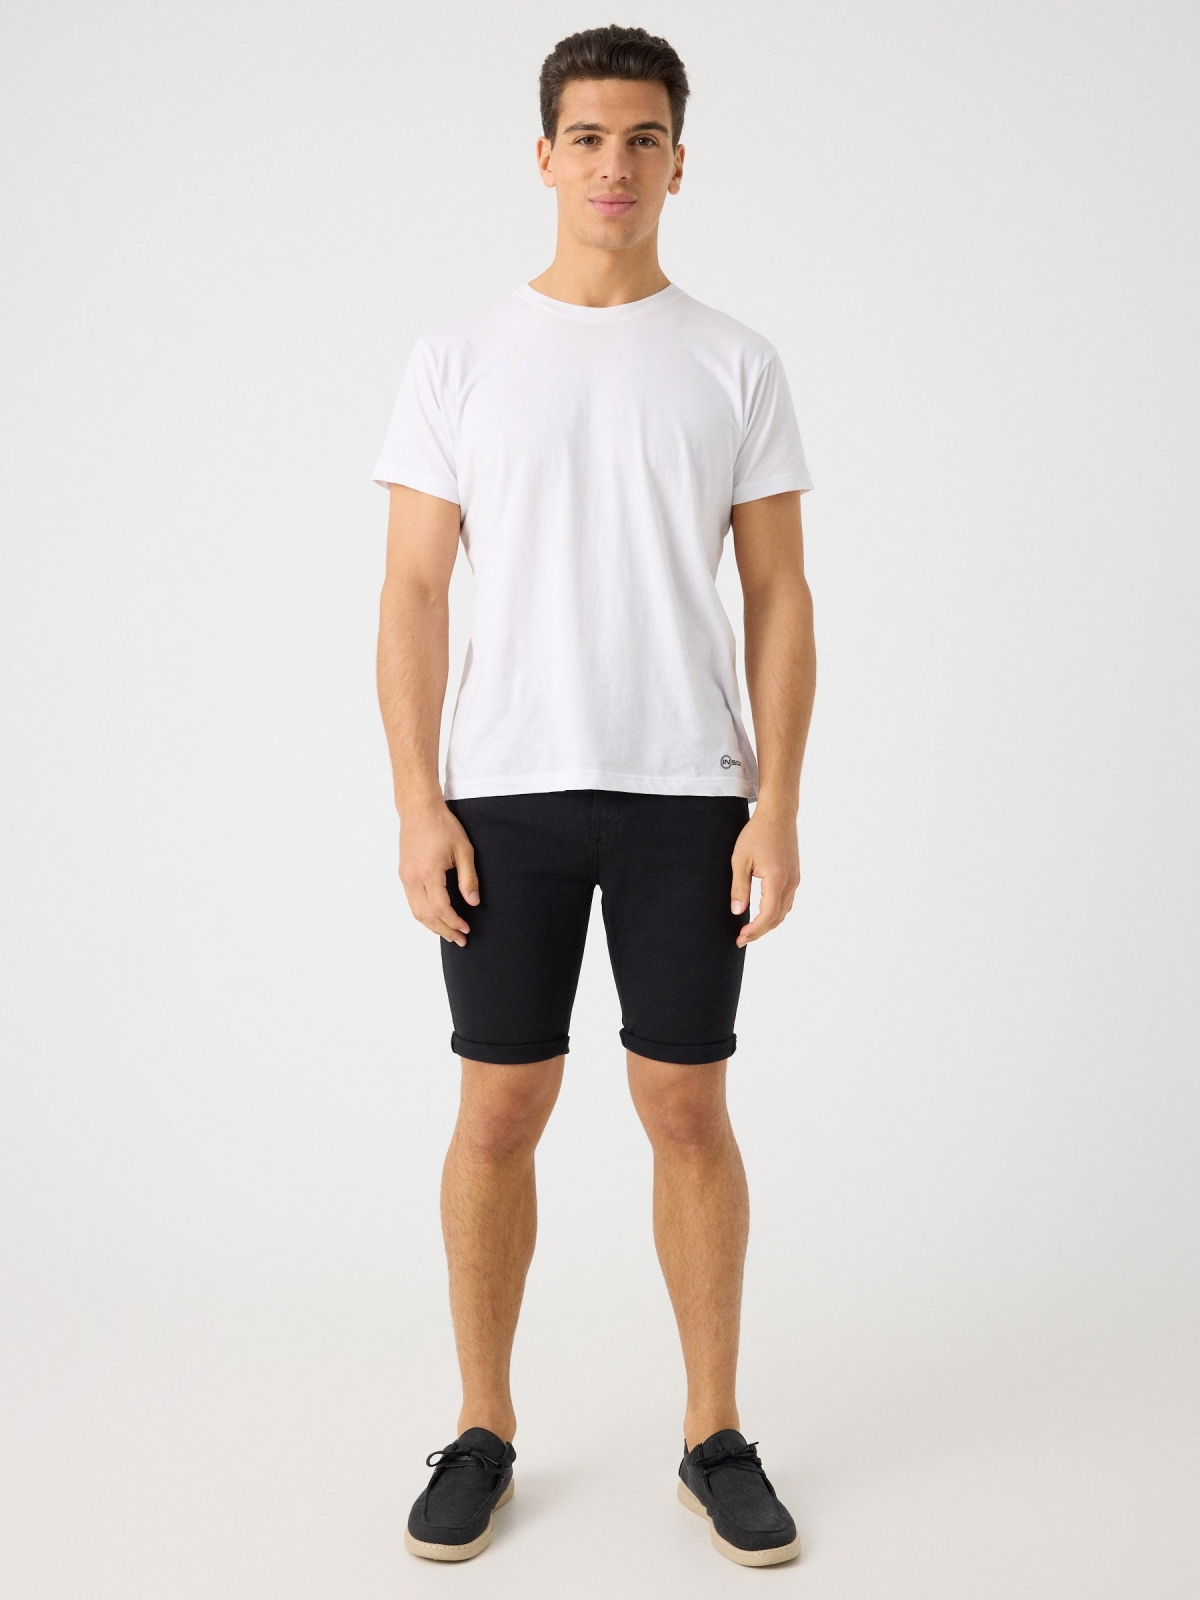 Coloured denim shorts black front view